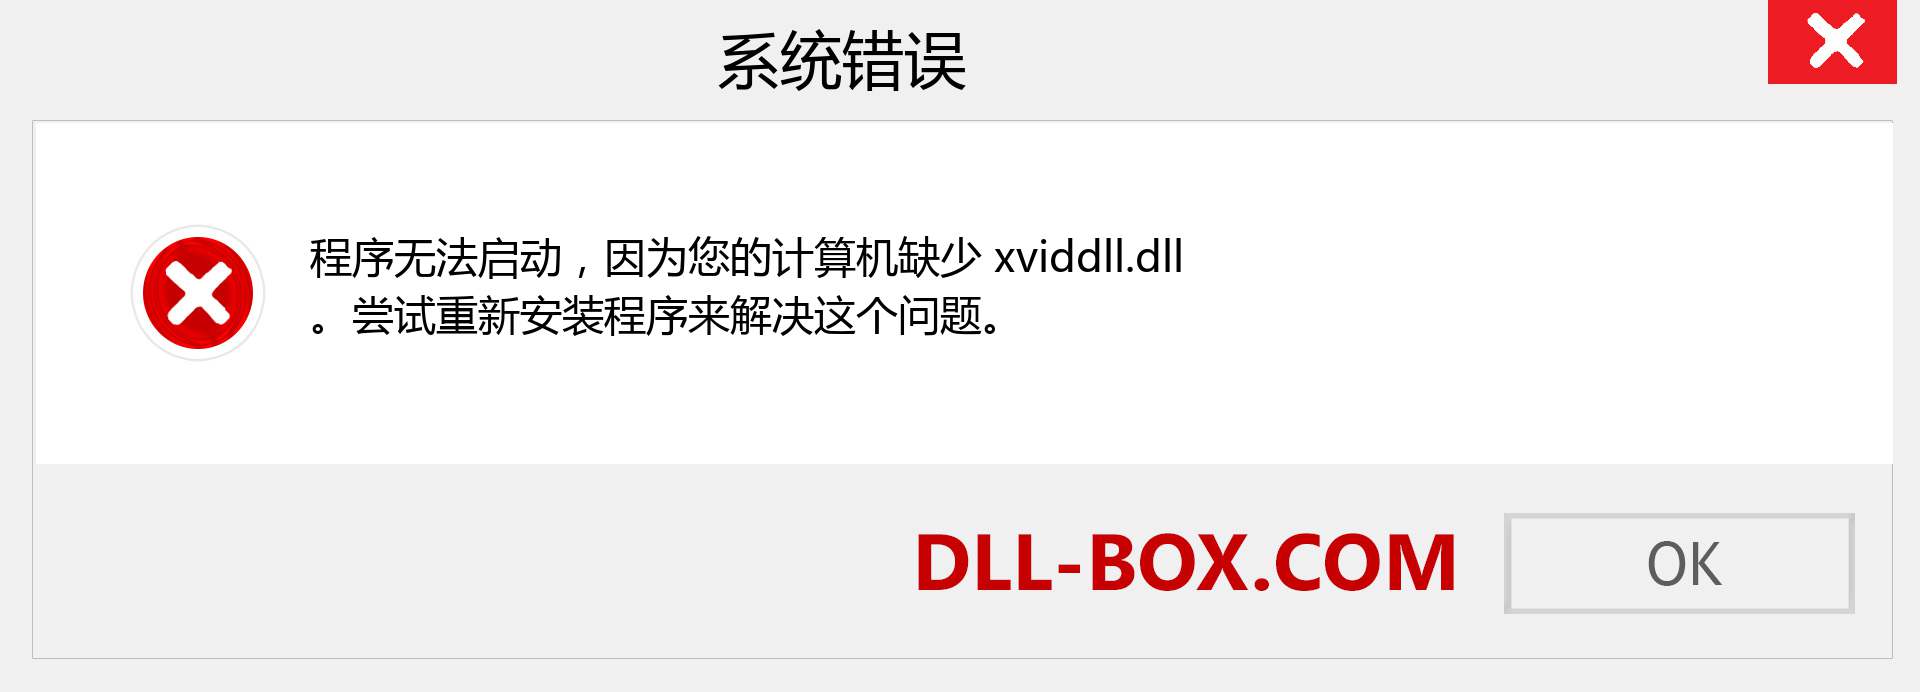 xviddll.dll 文件丢失？。 适用于 Windows 7、8、10 的下载 - 修复 Windows、照片、图像上的 xviddll dll 丢失错误